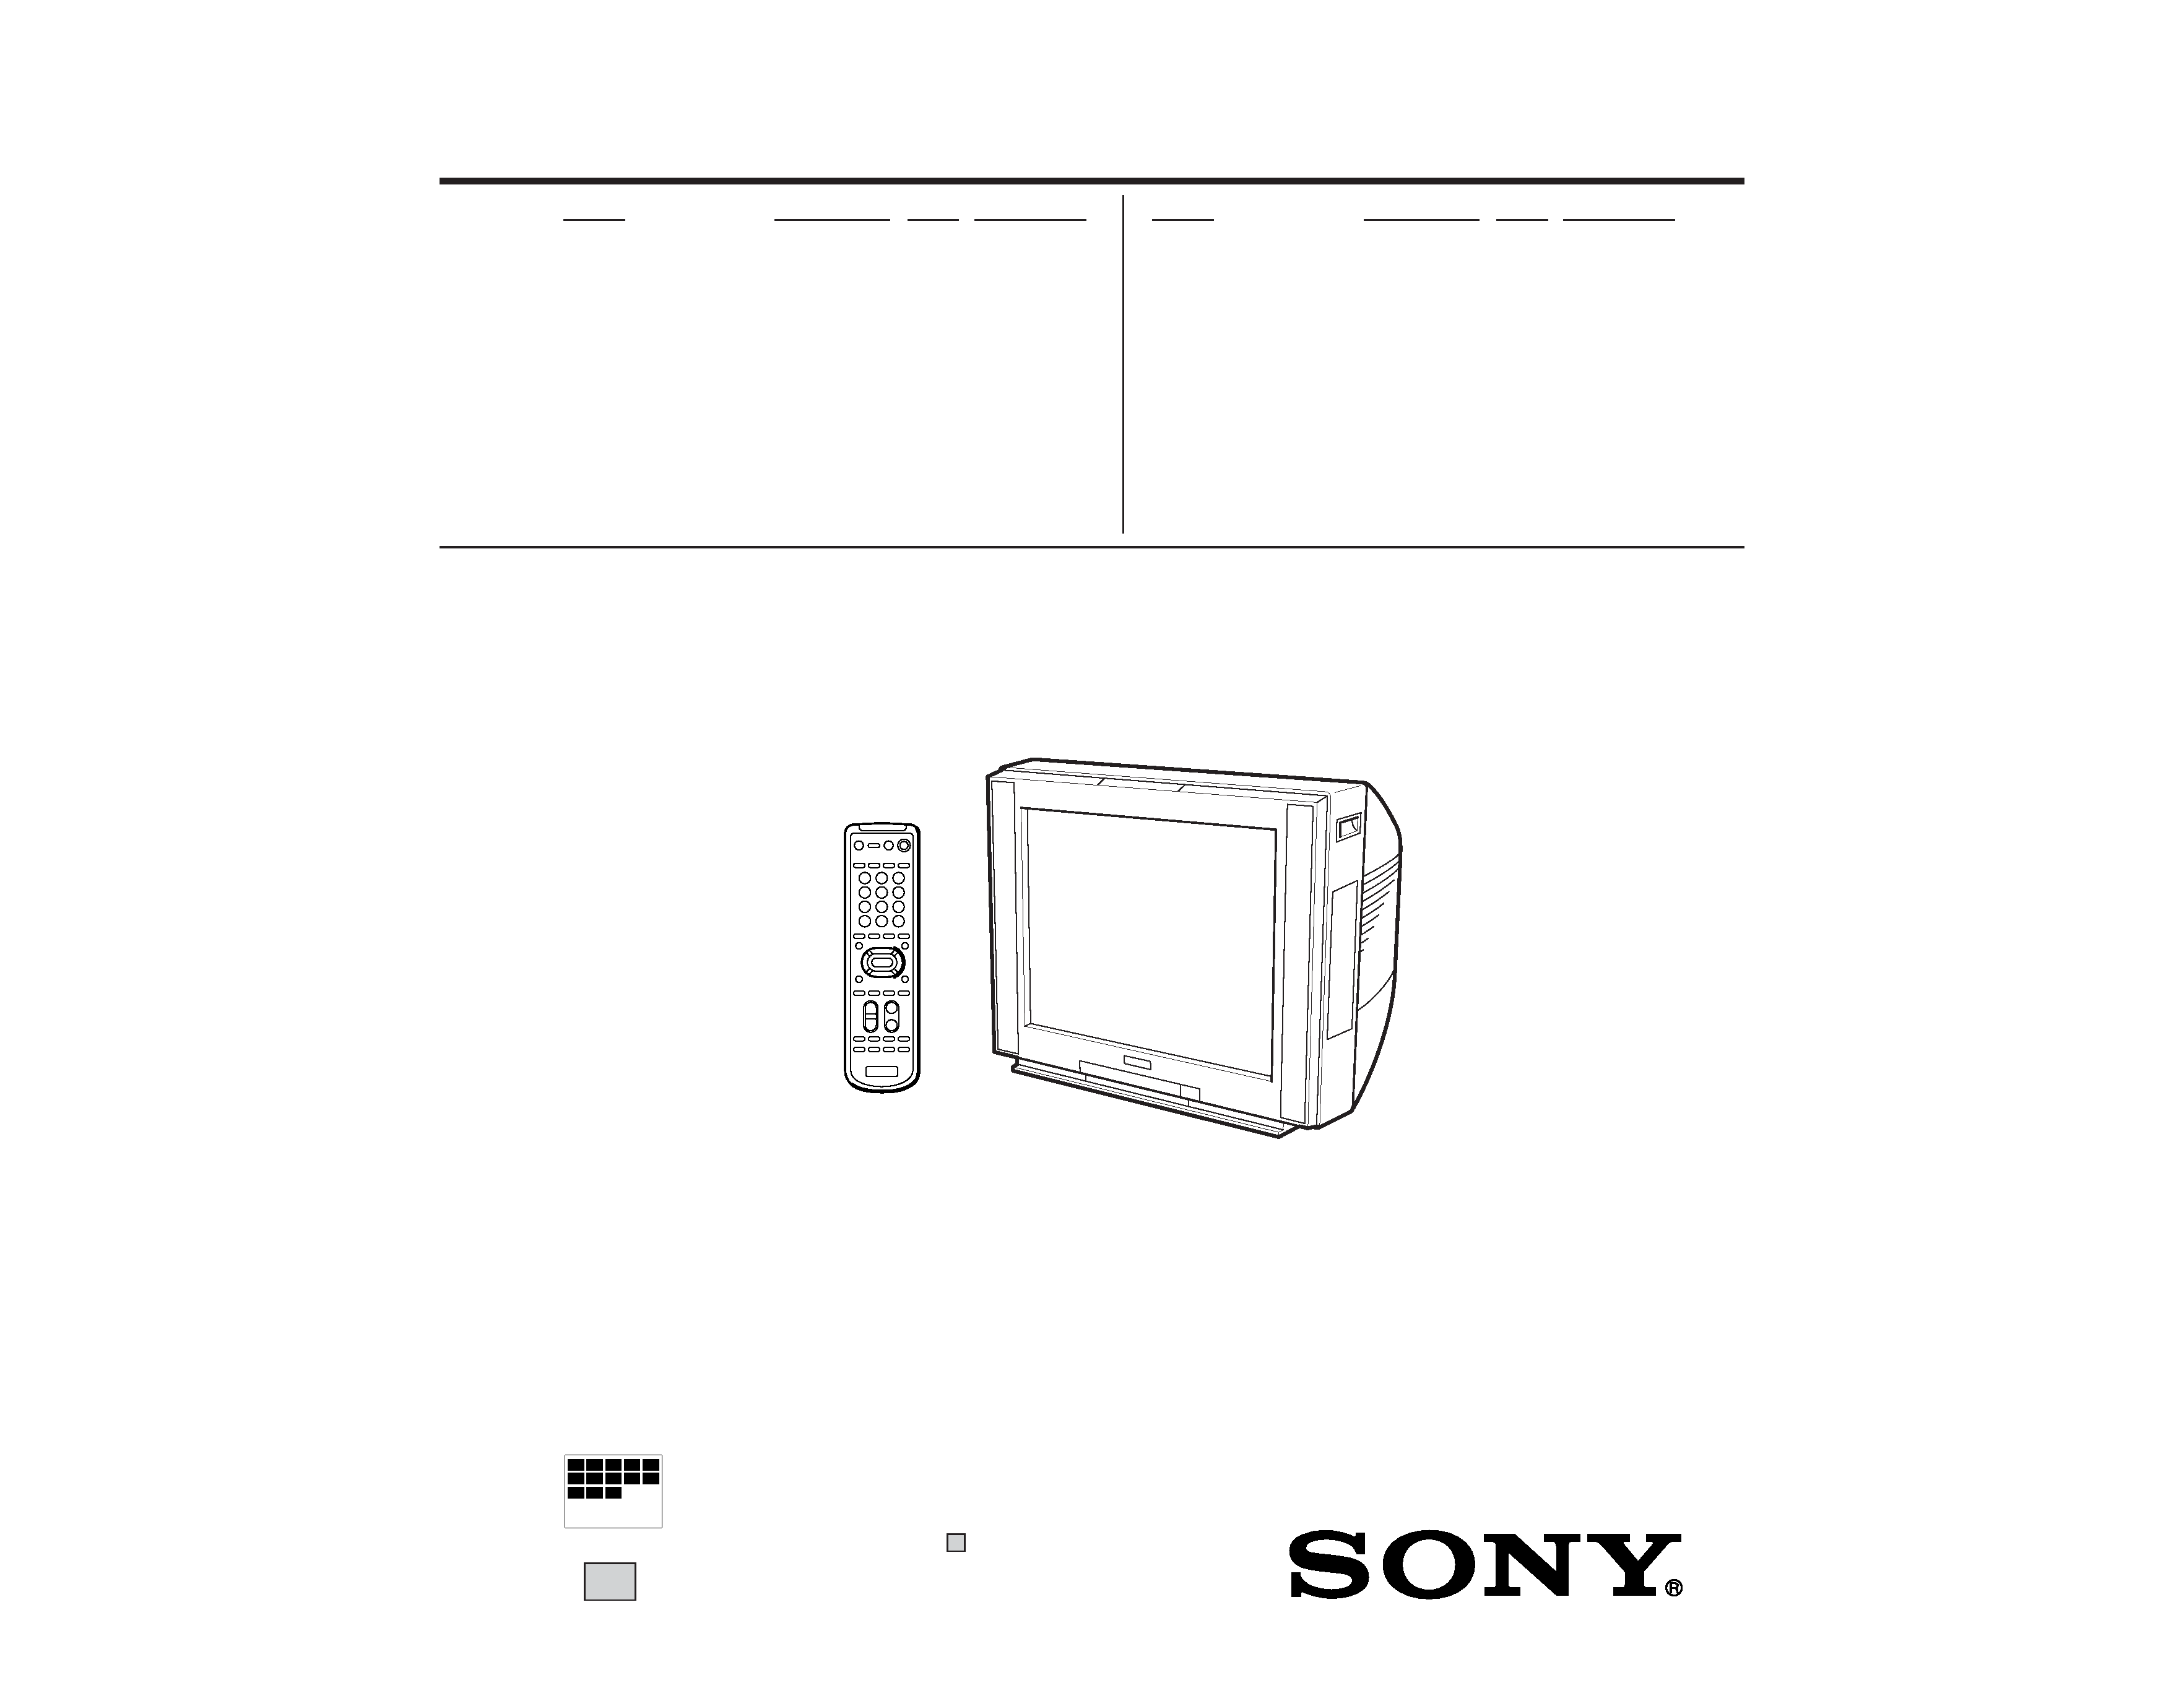 Телевизор Sony Trinitron KV-m2540k service manual. Sony KV 2184. Телевизор Sony Trinitron 14. Динамик для телевизора Sony KV-m2151kr. Схема телевизора sony